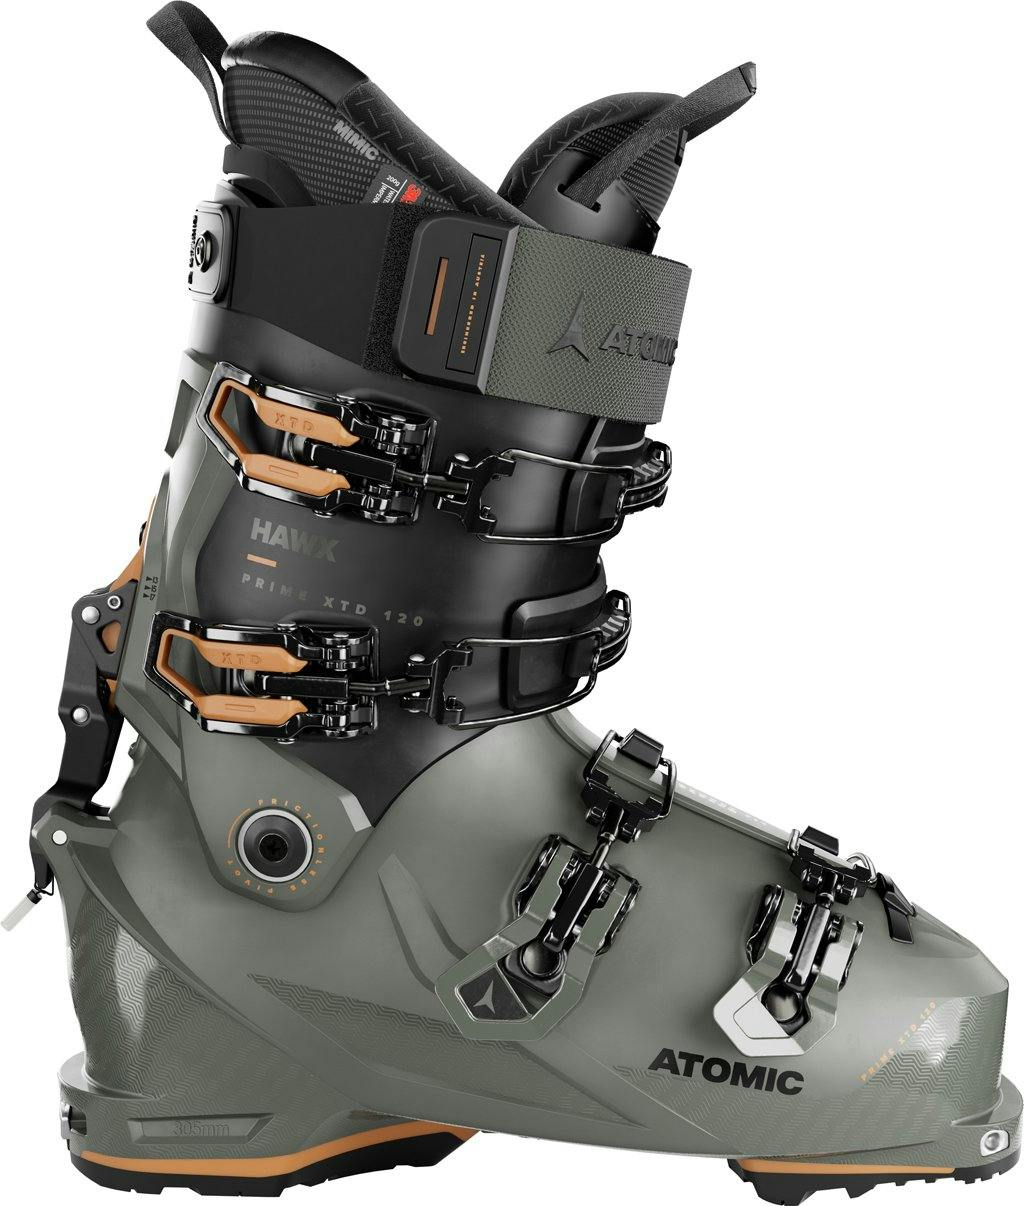 Product image for Hawx Prime XTD 120 GW Ski Boots - Unisex